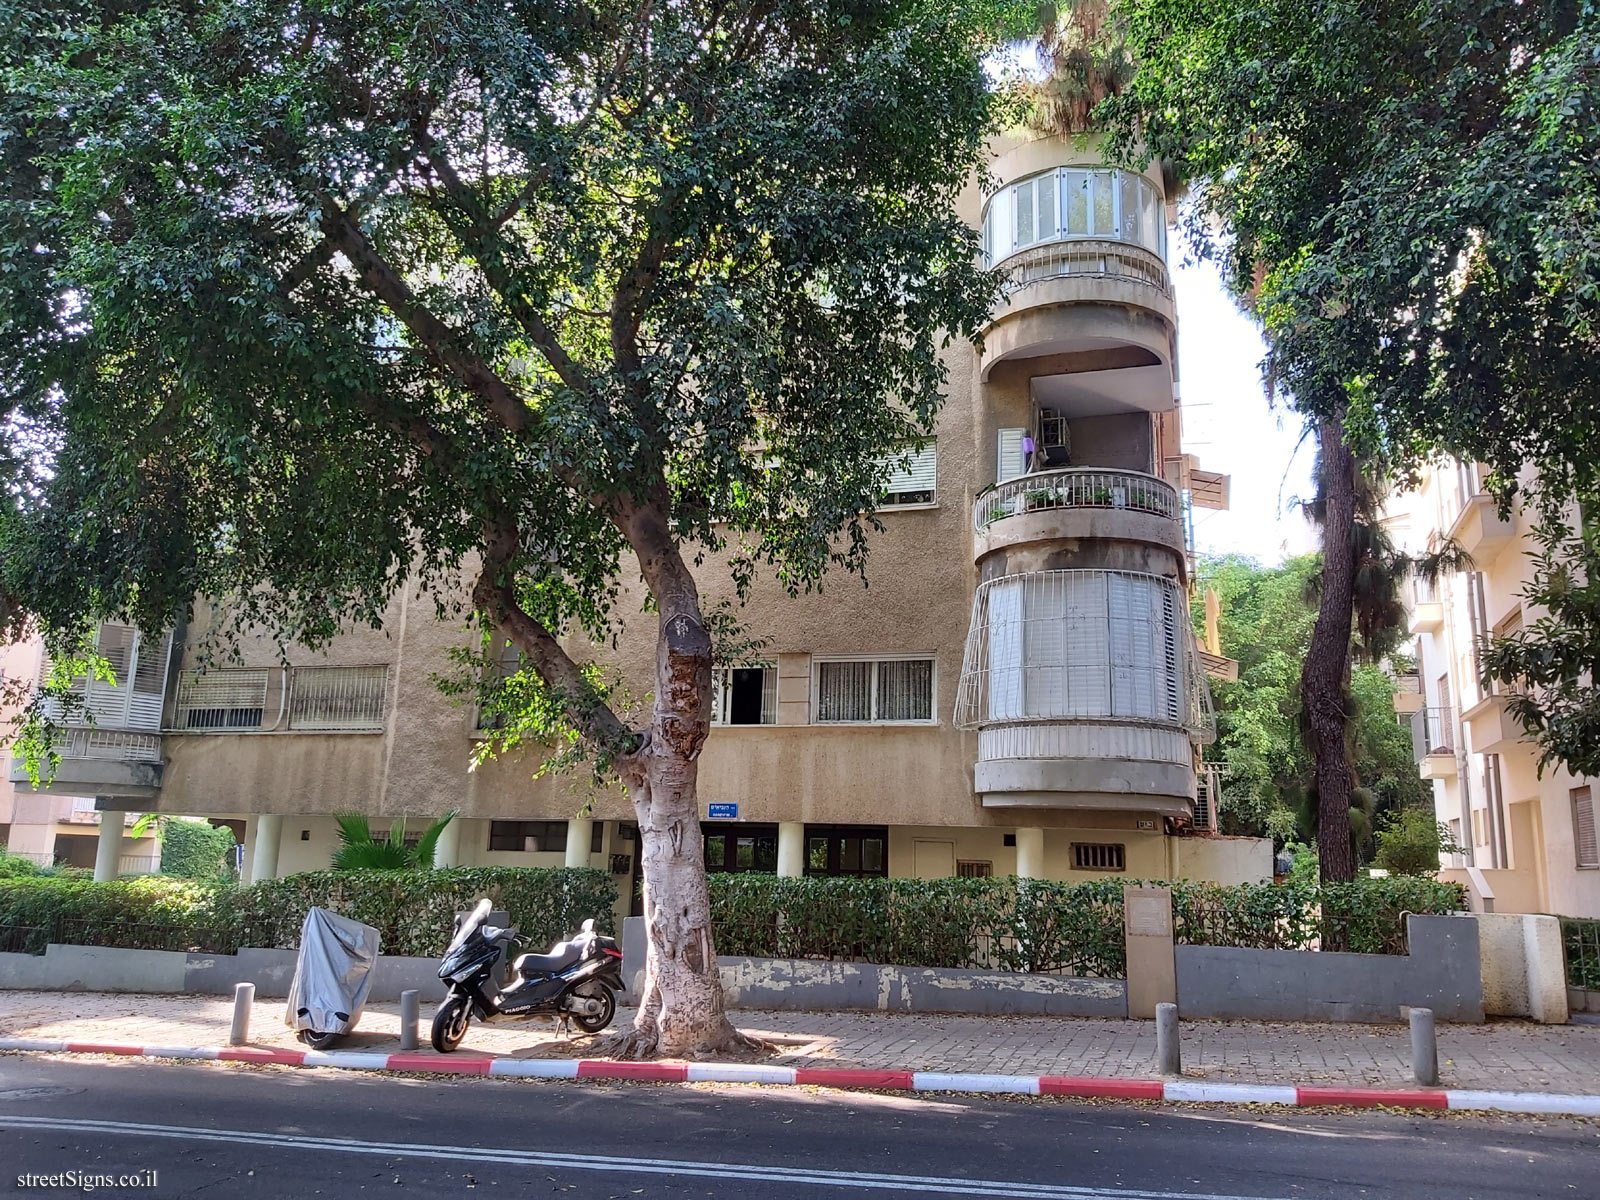 David Raziel’s Residence - Ha-Nevi’im St 30, Tel Aviv-Yafo, Israel